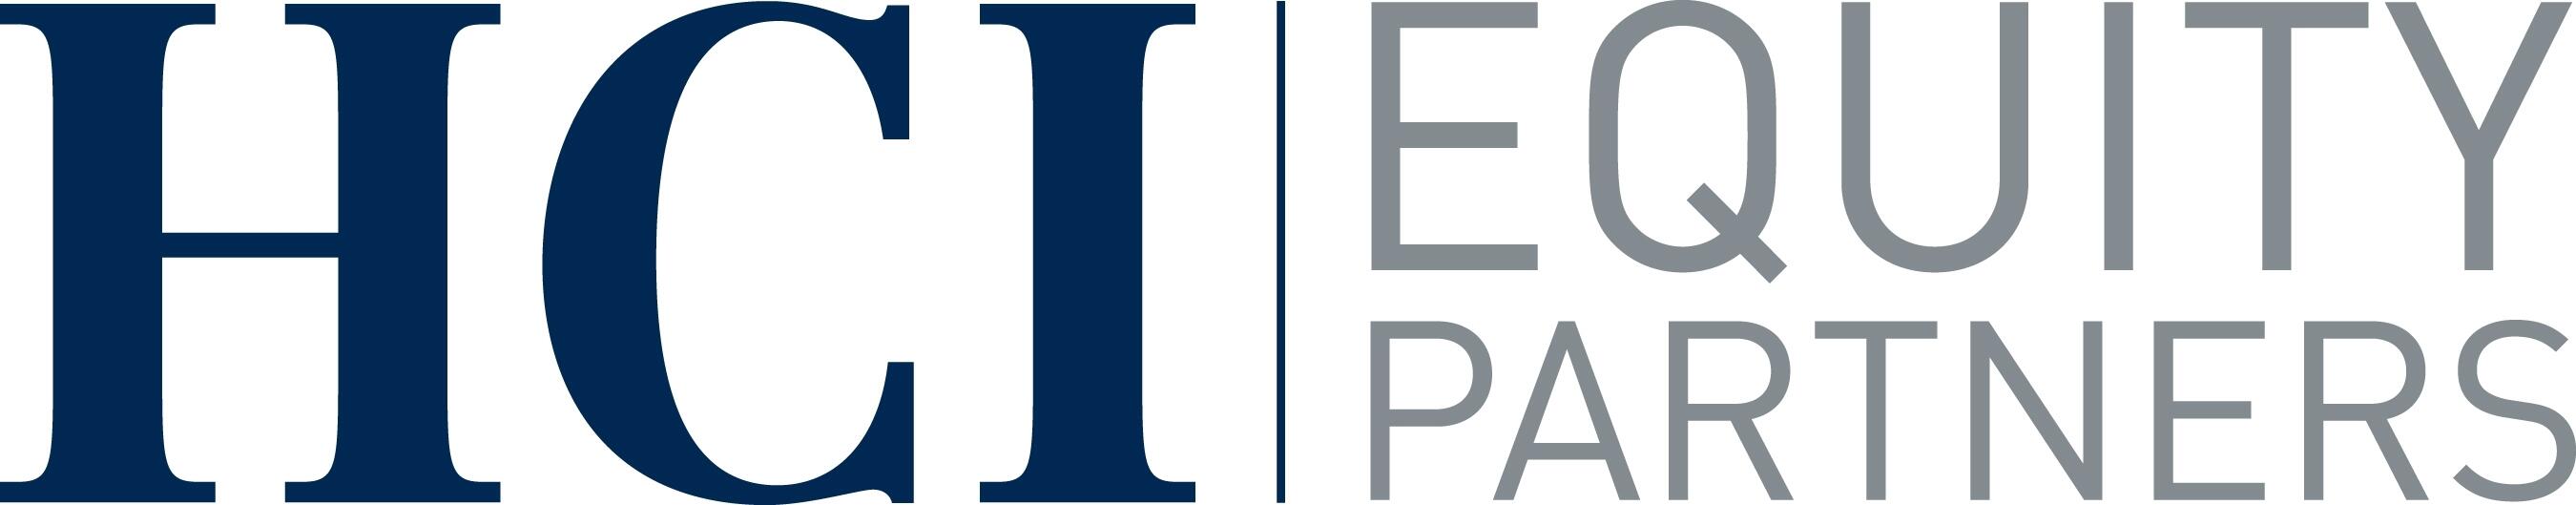 HCI Equity Partners logo